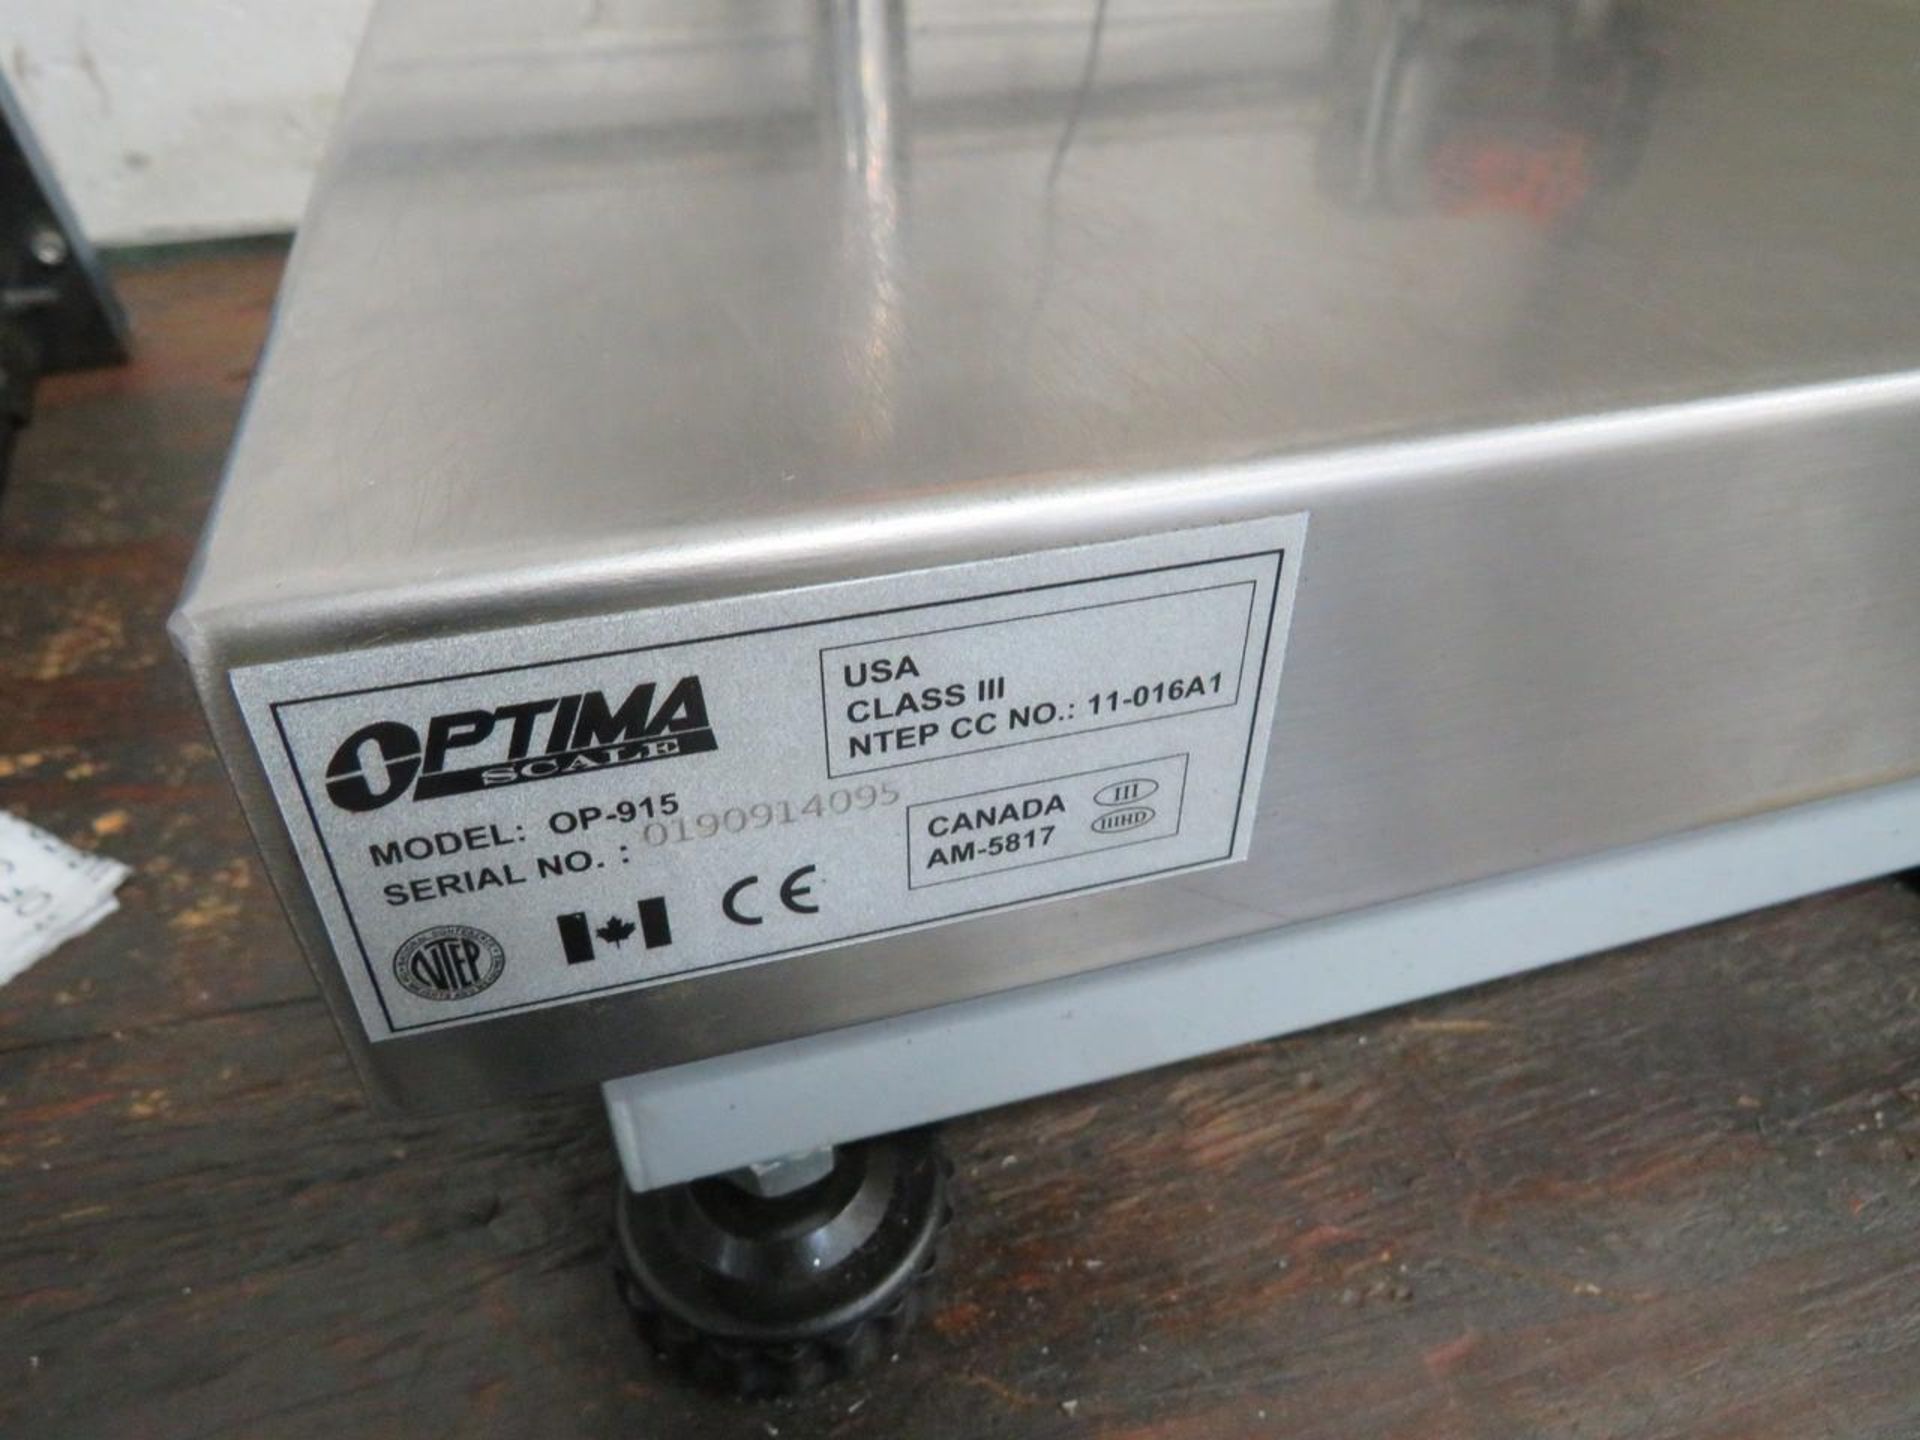 OPTIMA OP-915 CLASS III PLATFORM SCALE WITH WEIGHT INDICATOR - Image 3 of 7